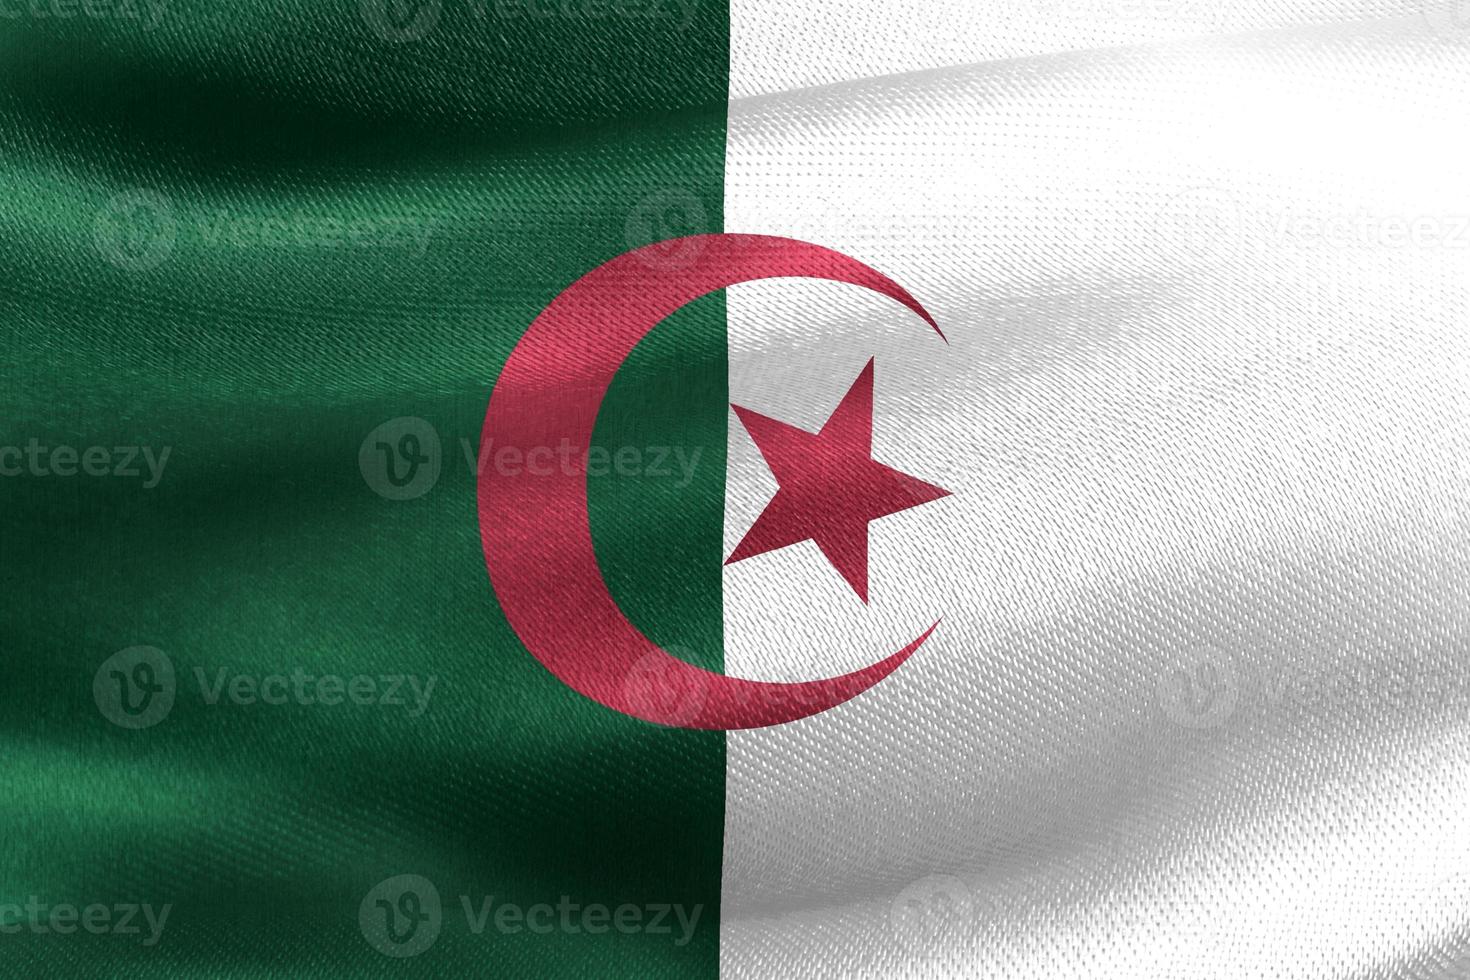 Algeriets flagga - realistiskt viftande tygflagga foto